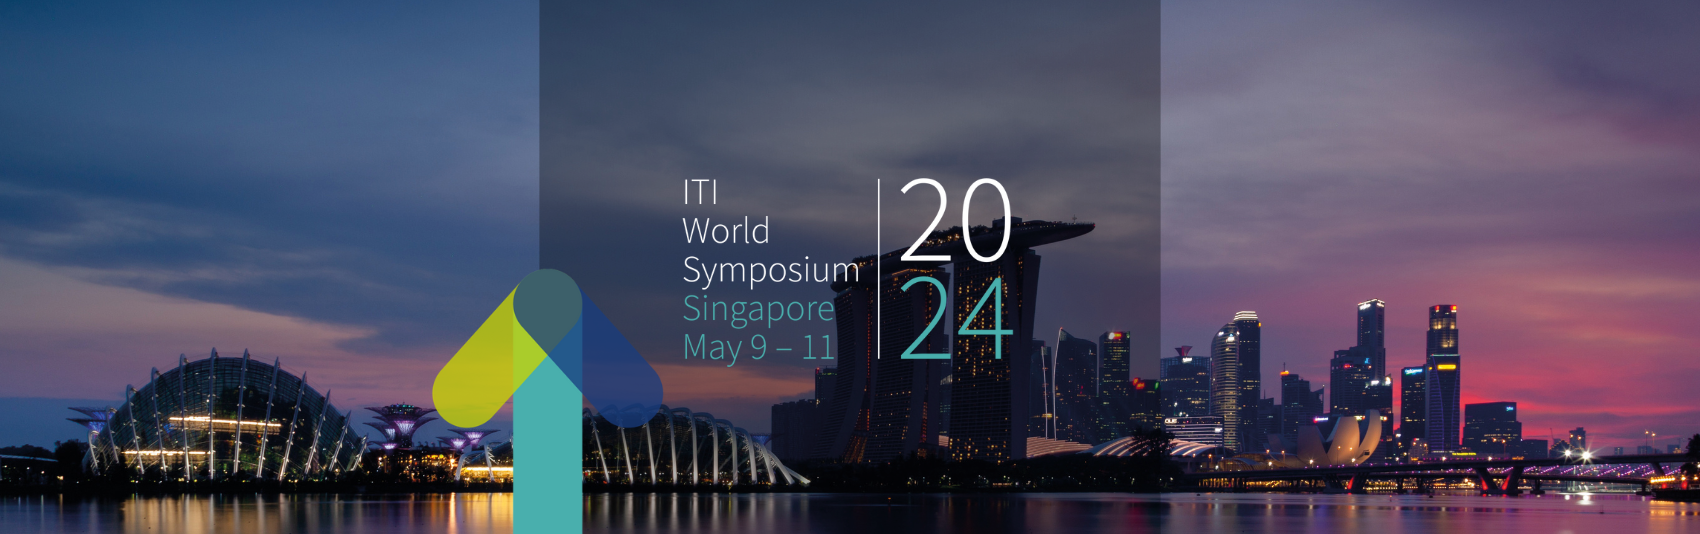 ITI World Symposium 2024 banner